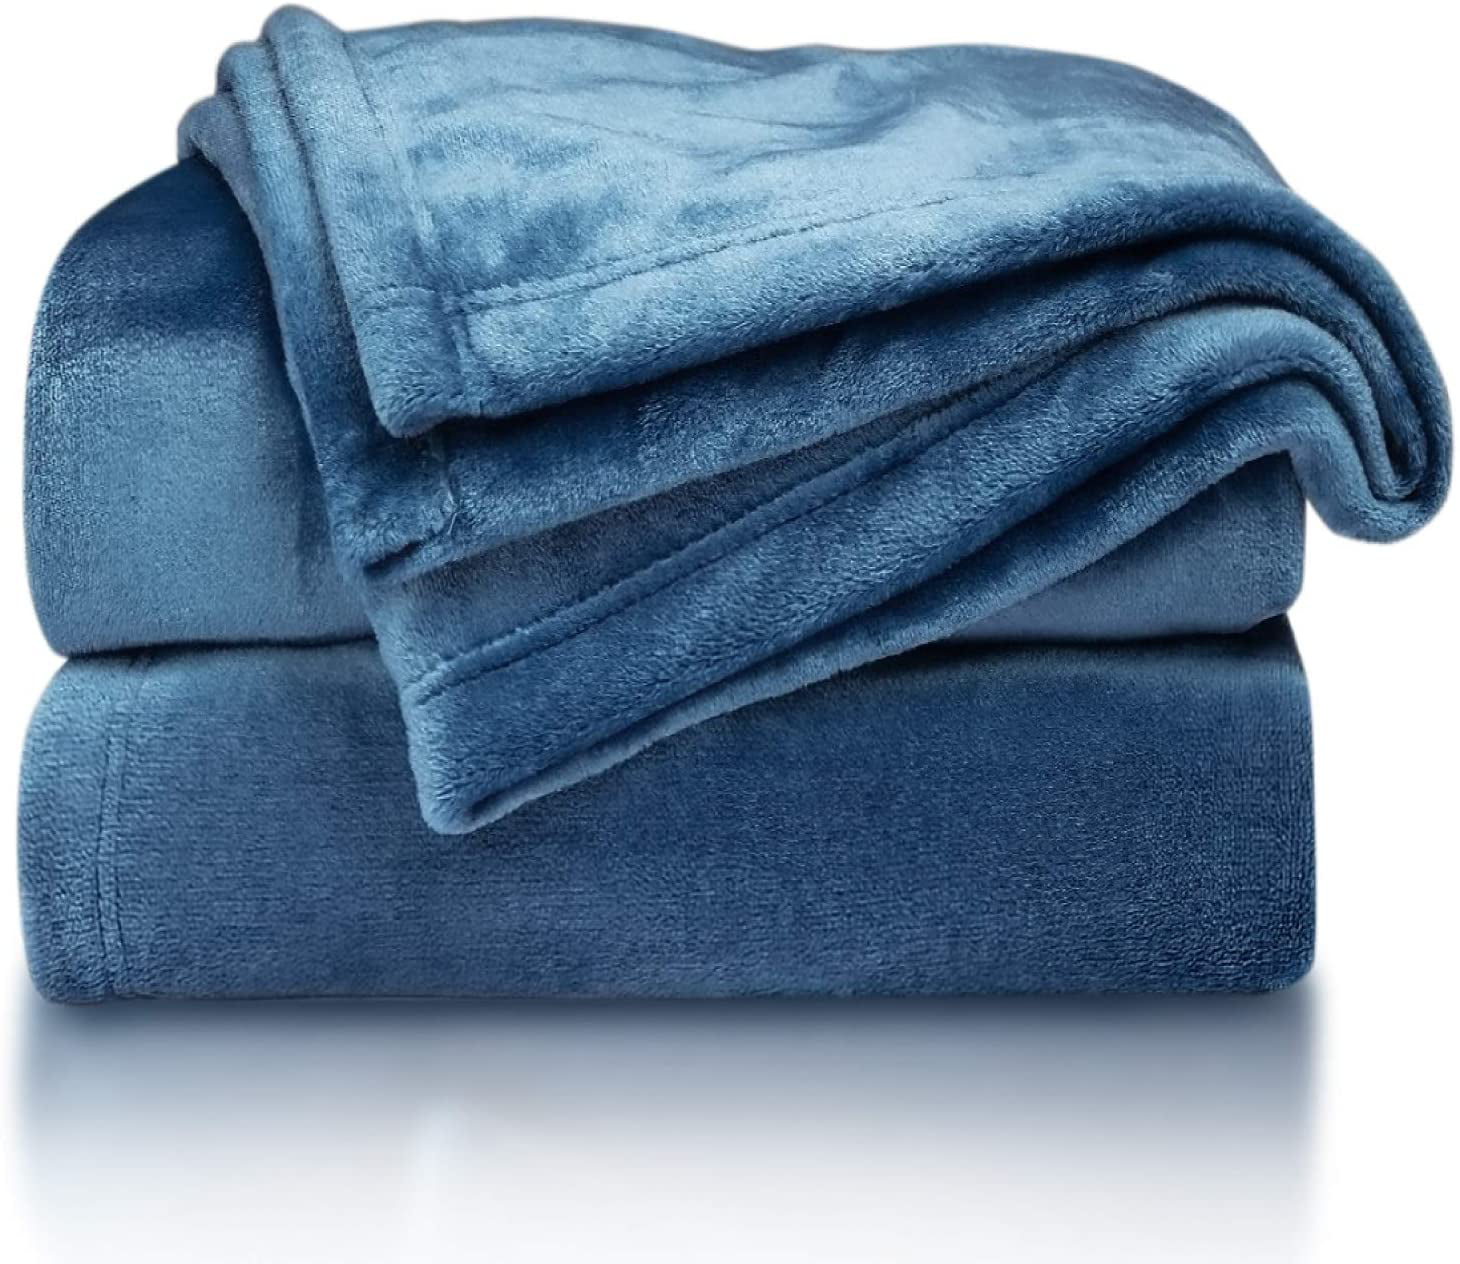 Flannel Microfiber Blanket Lightweight Super Soft Cozy Bed Blanket 50x40